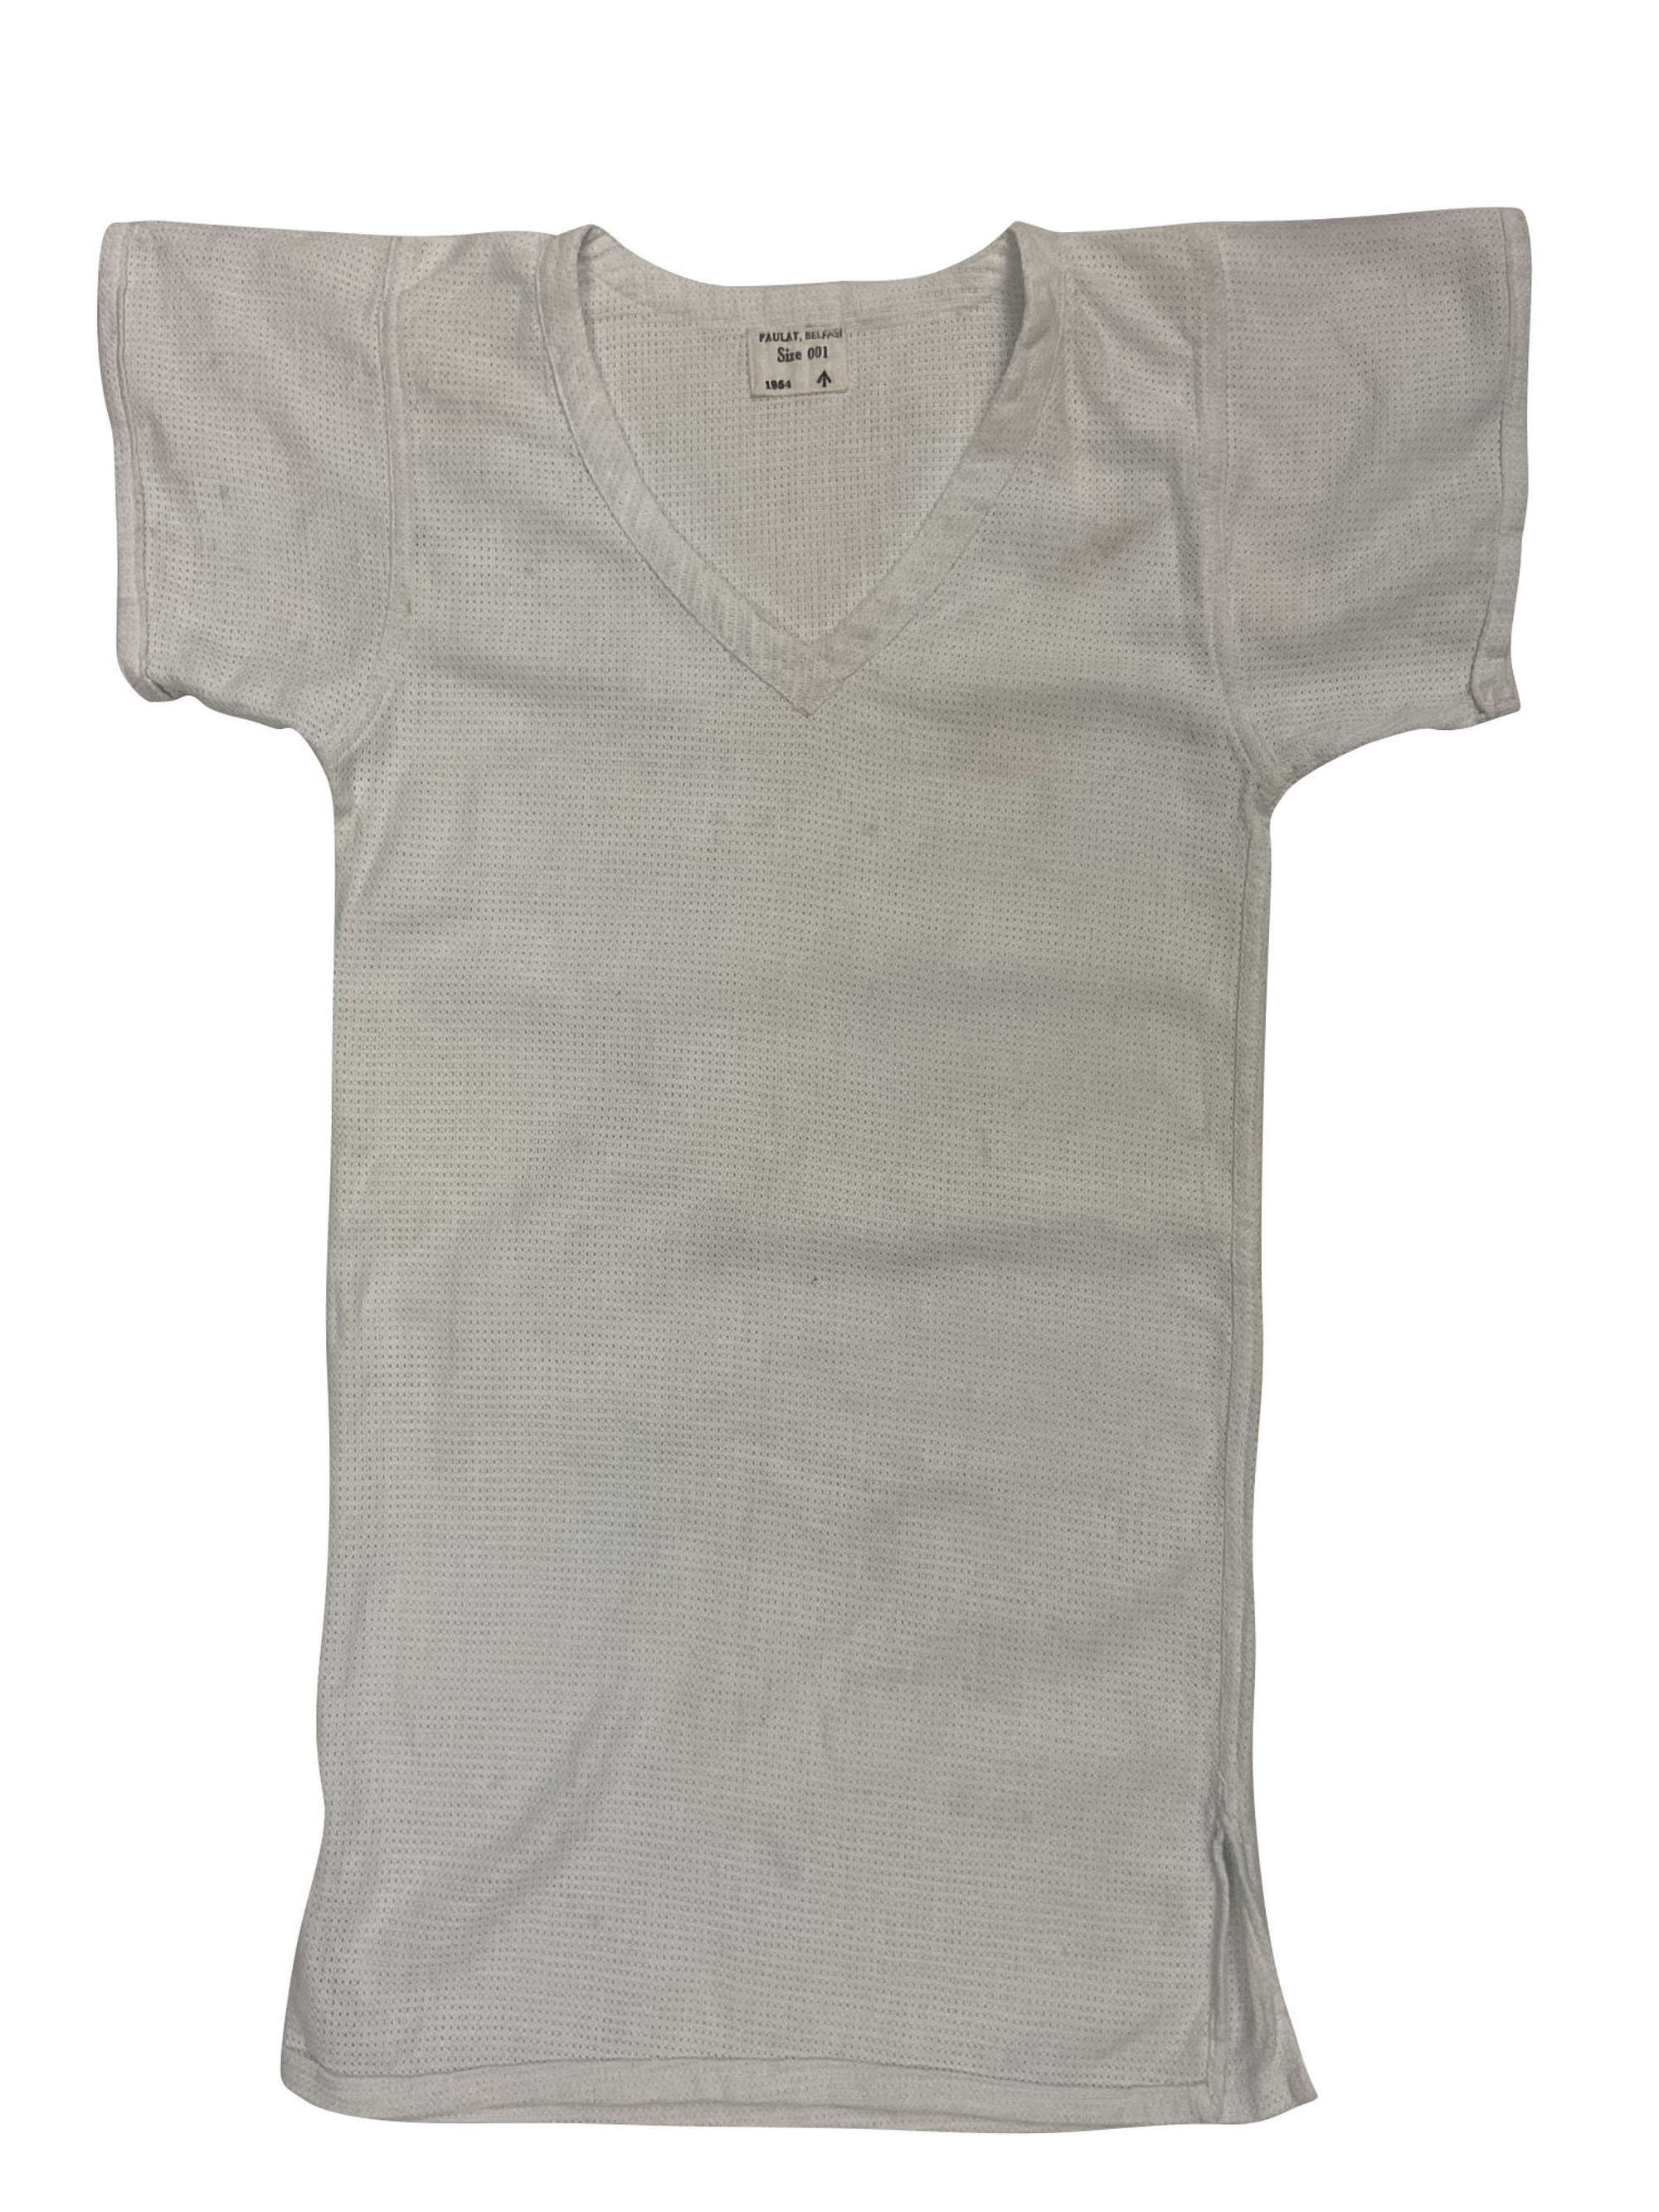 Original 1954 Dated British Army Aertex V-Neck Shirt - Size 001